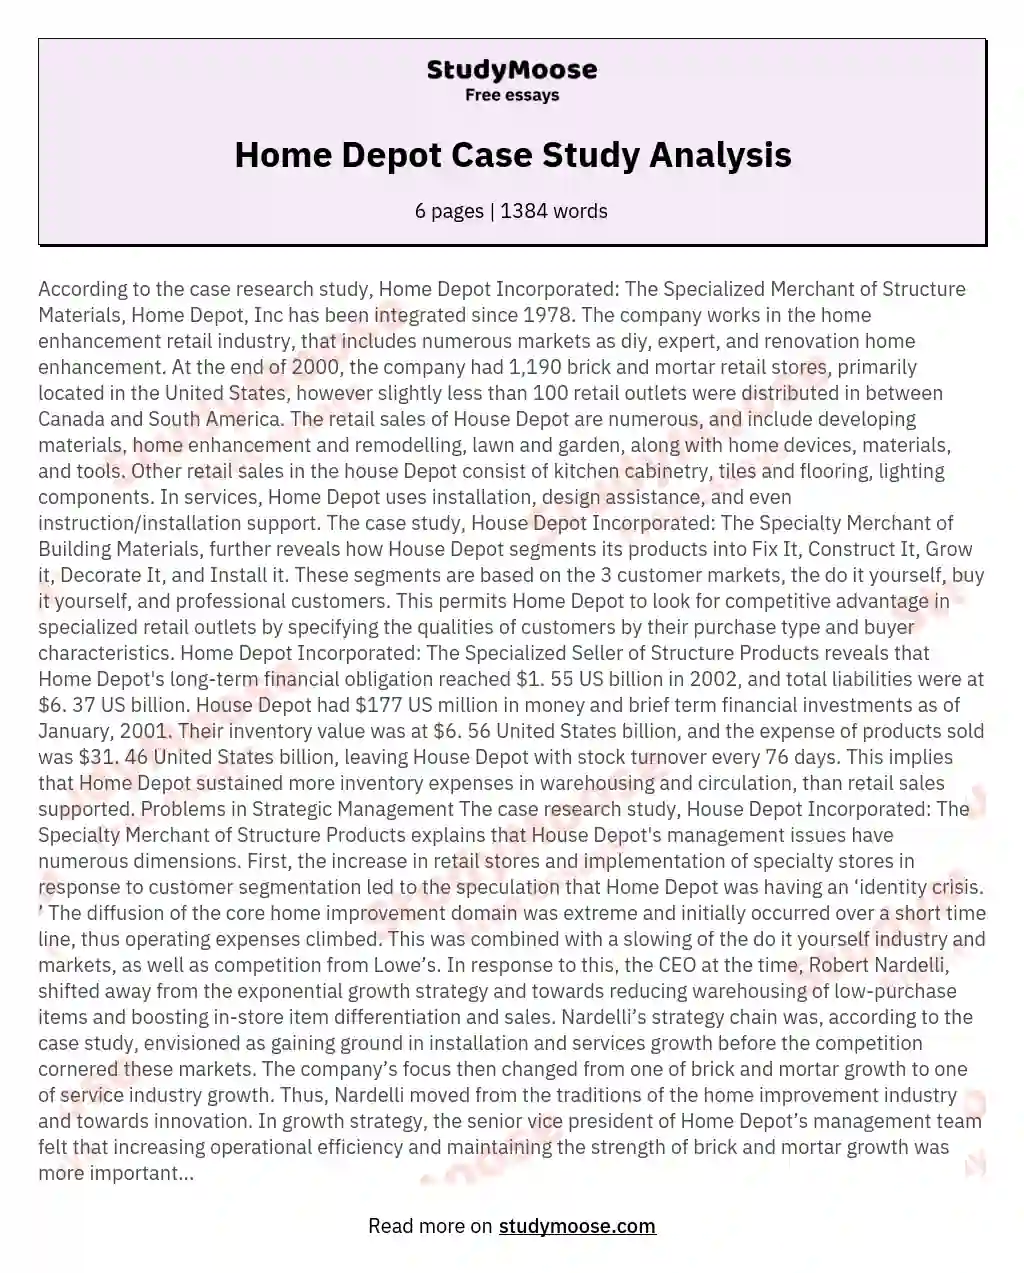 Home Depot Case Study Analysis